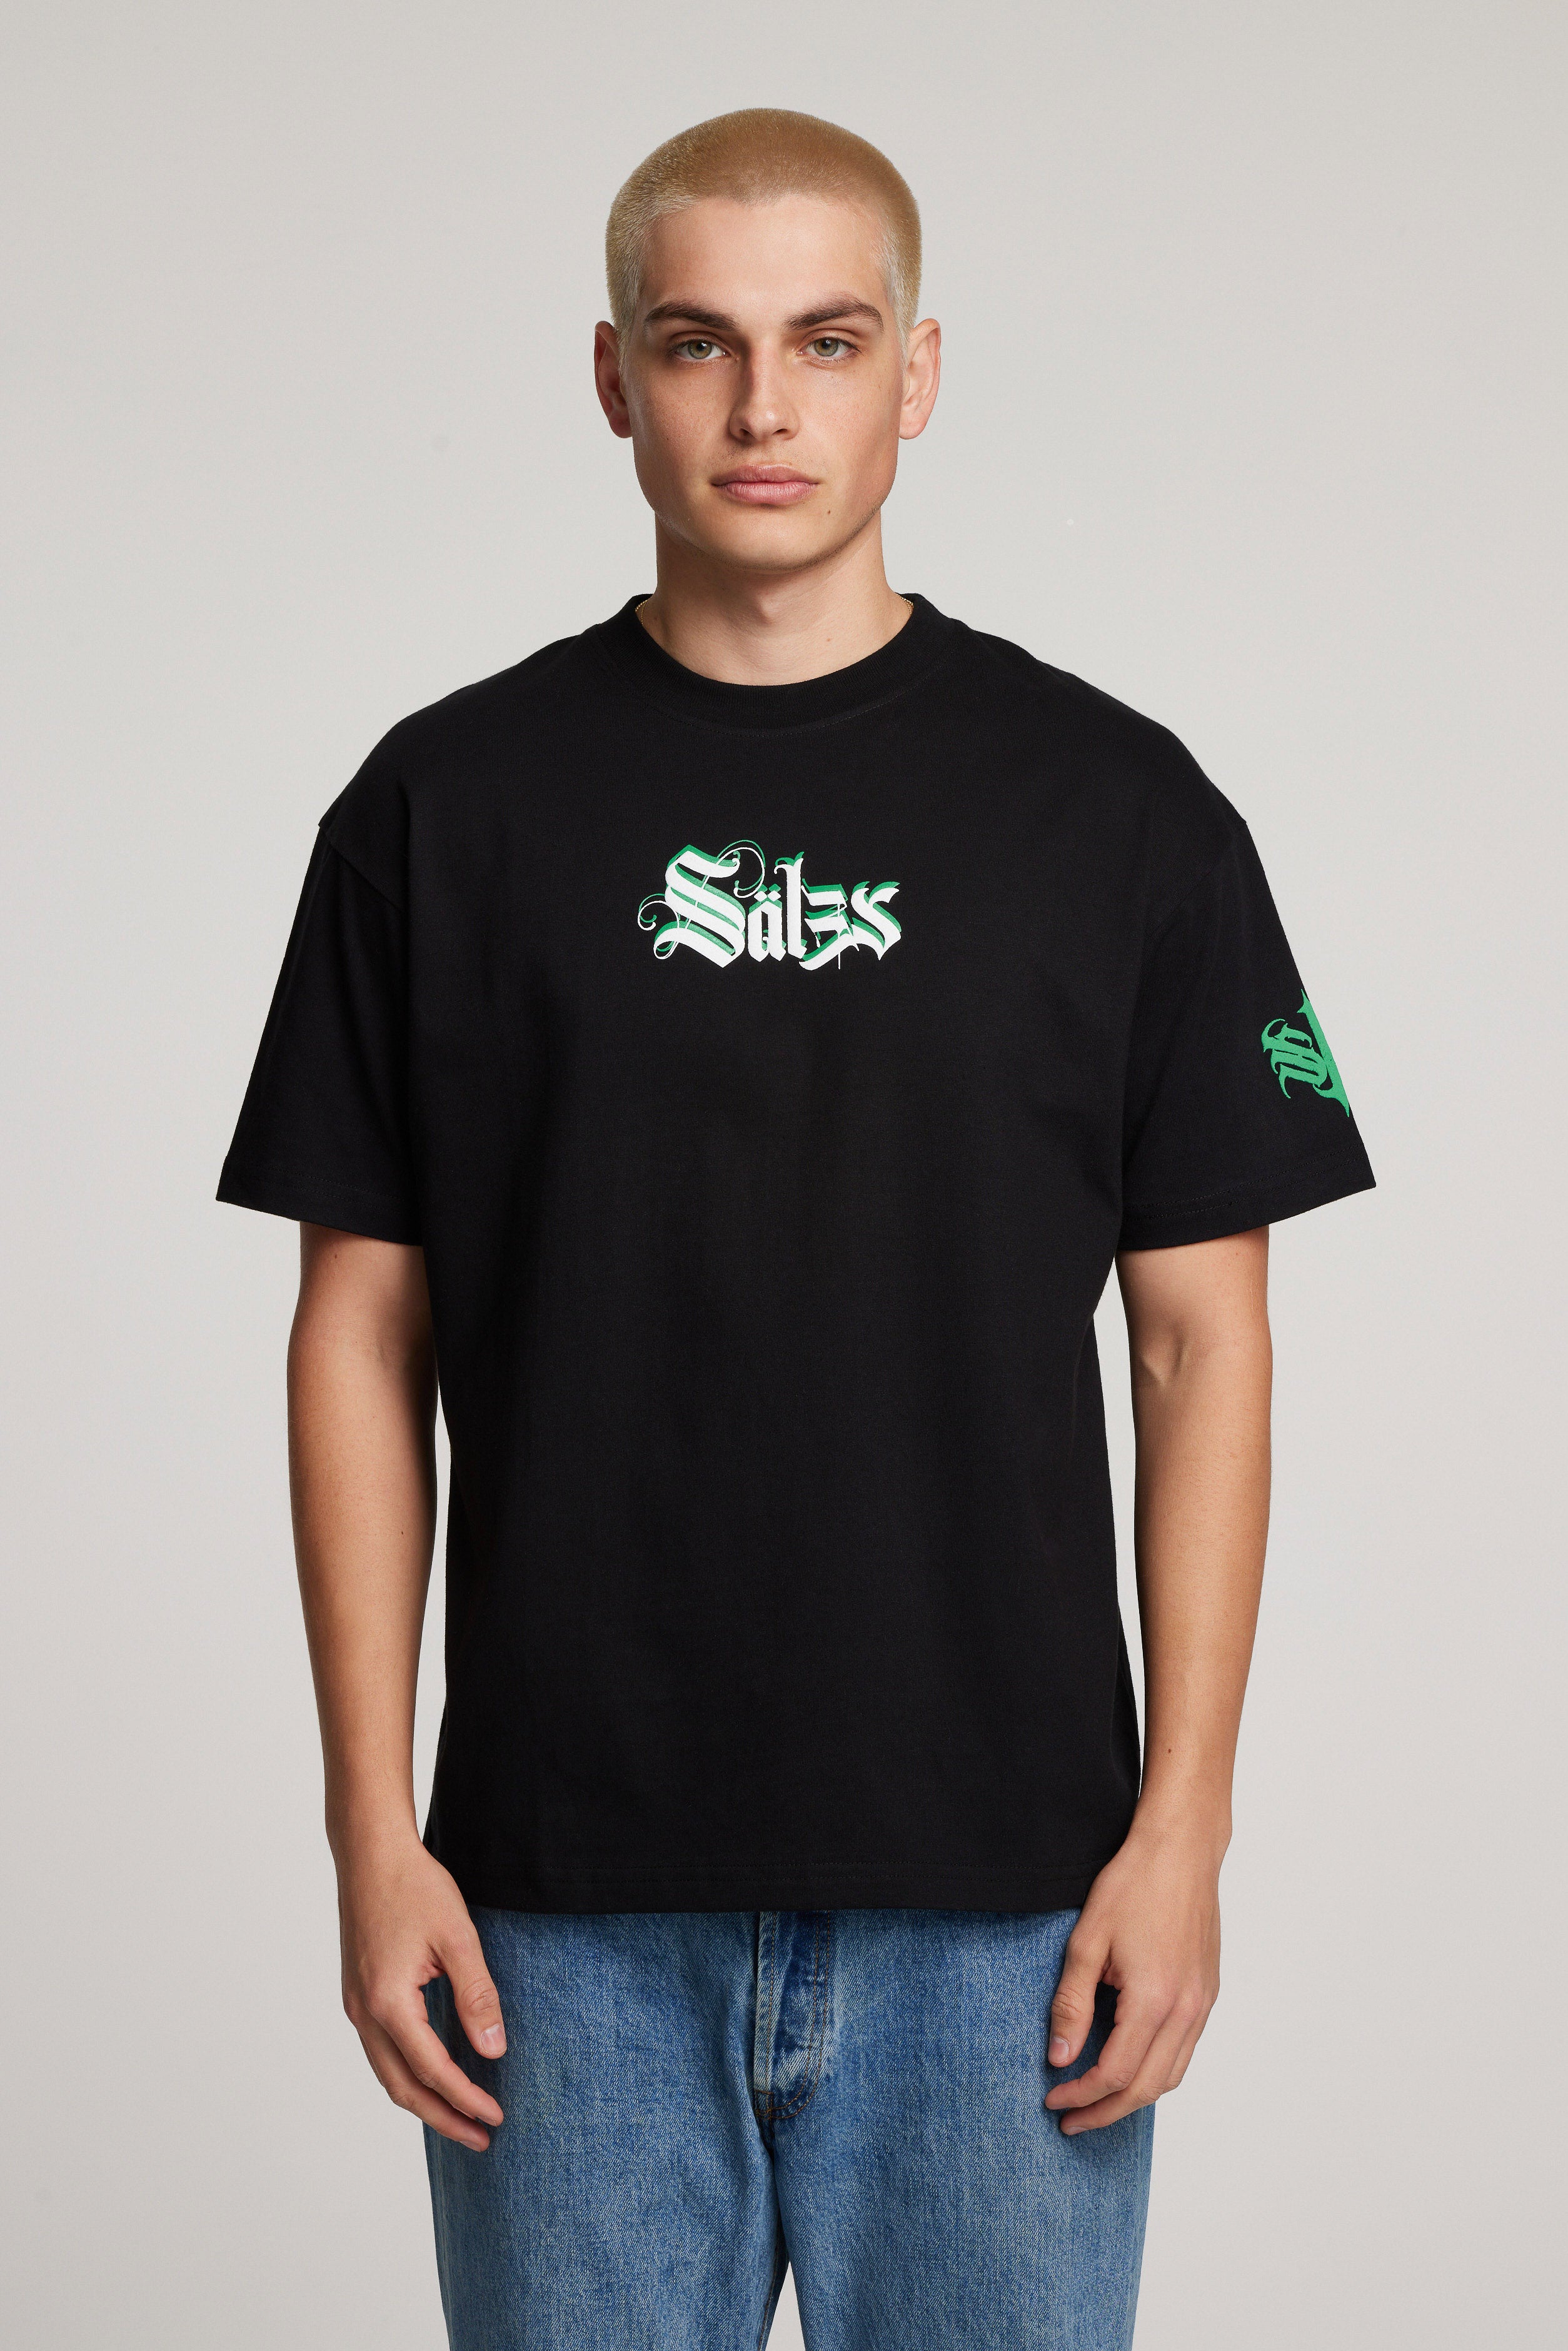 S.T.4.T.S Tee – SSS Clothing LLC